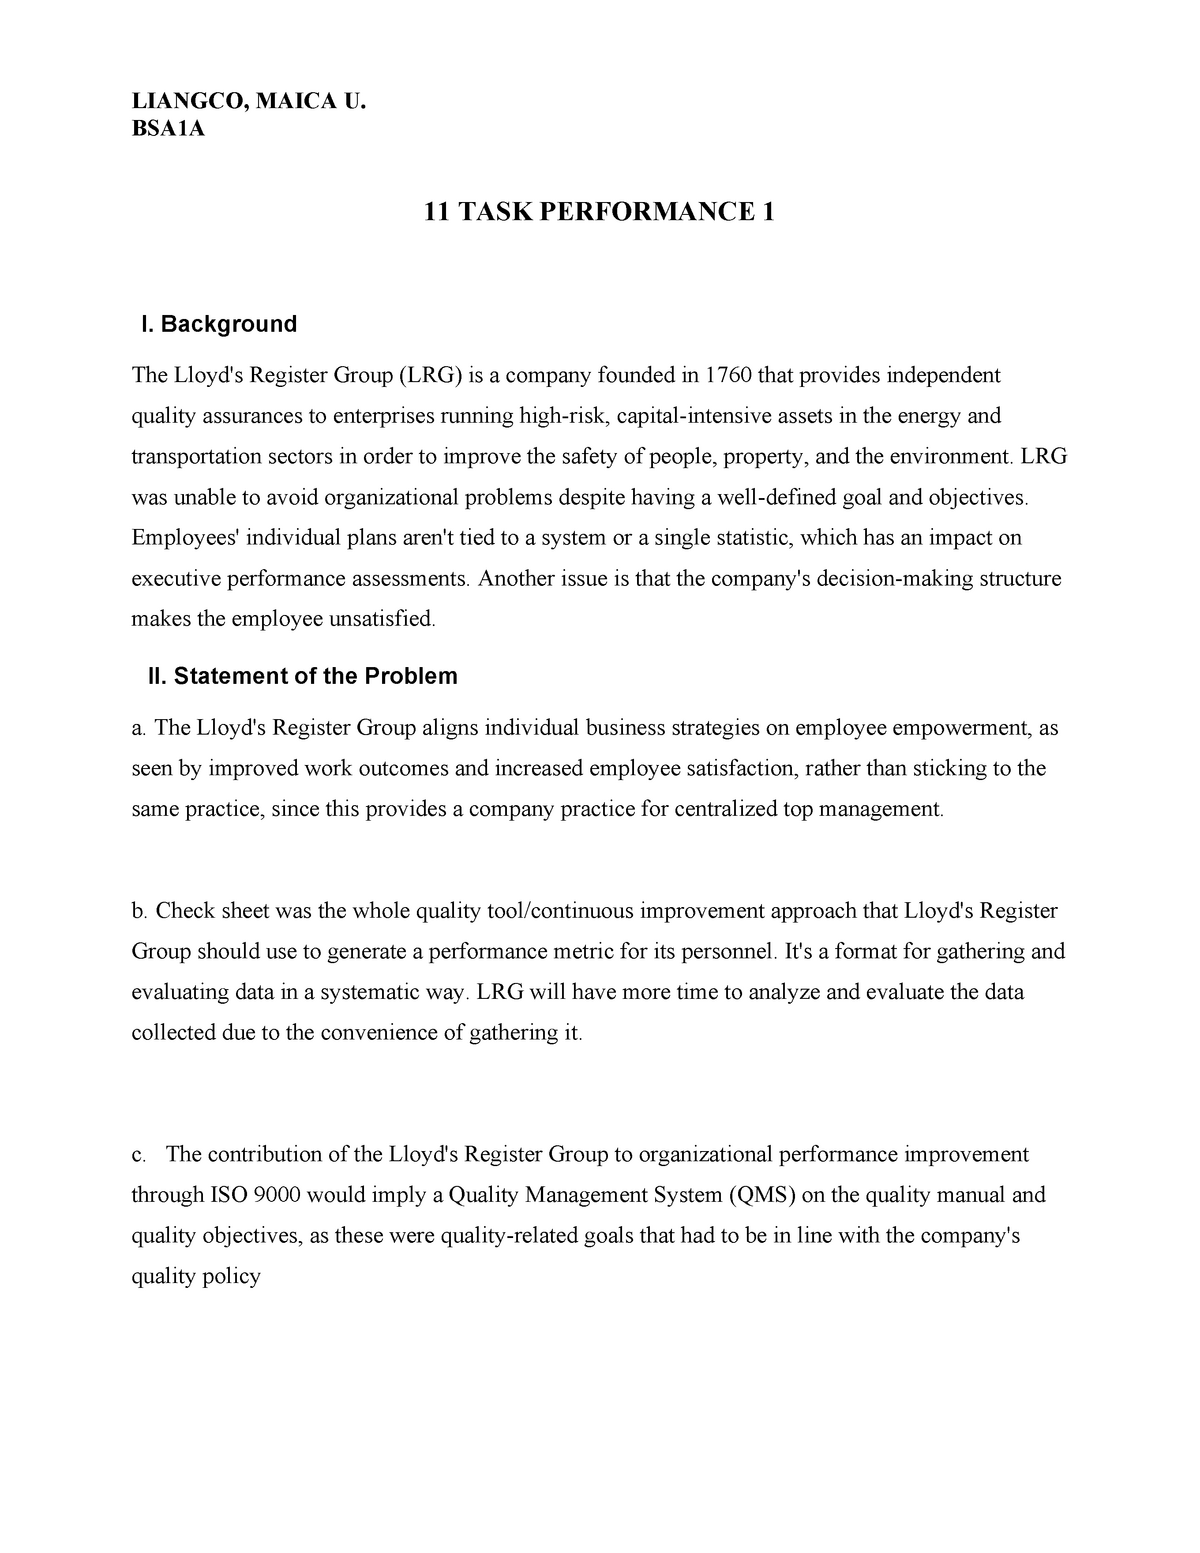 louis vitton task-performance .docx - 07 TASK PERFORMANCE 01 Write